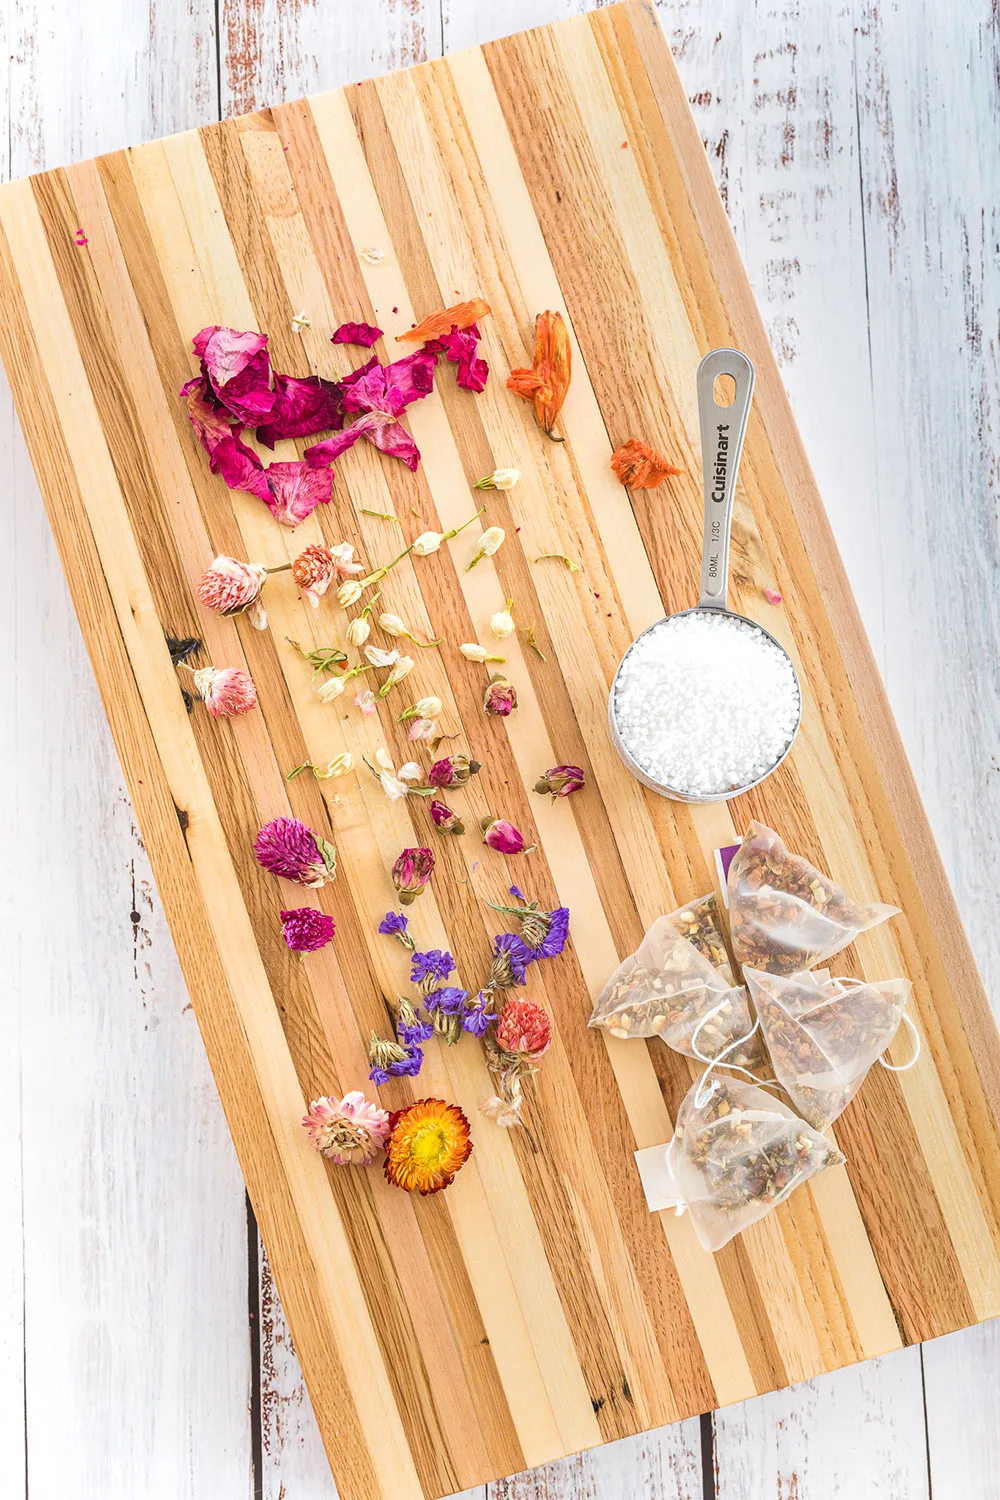 Board full of ingredients to make floral tea globes.